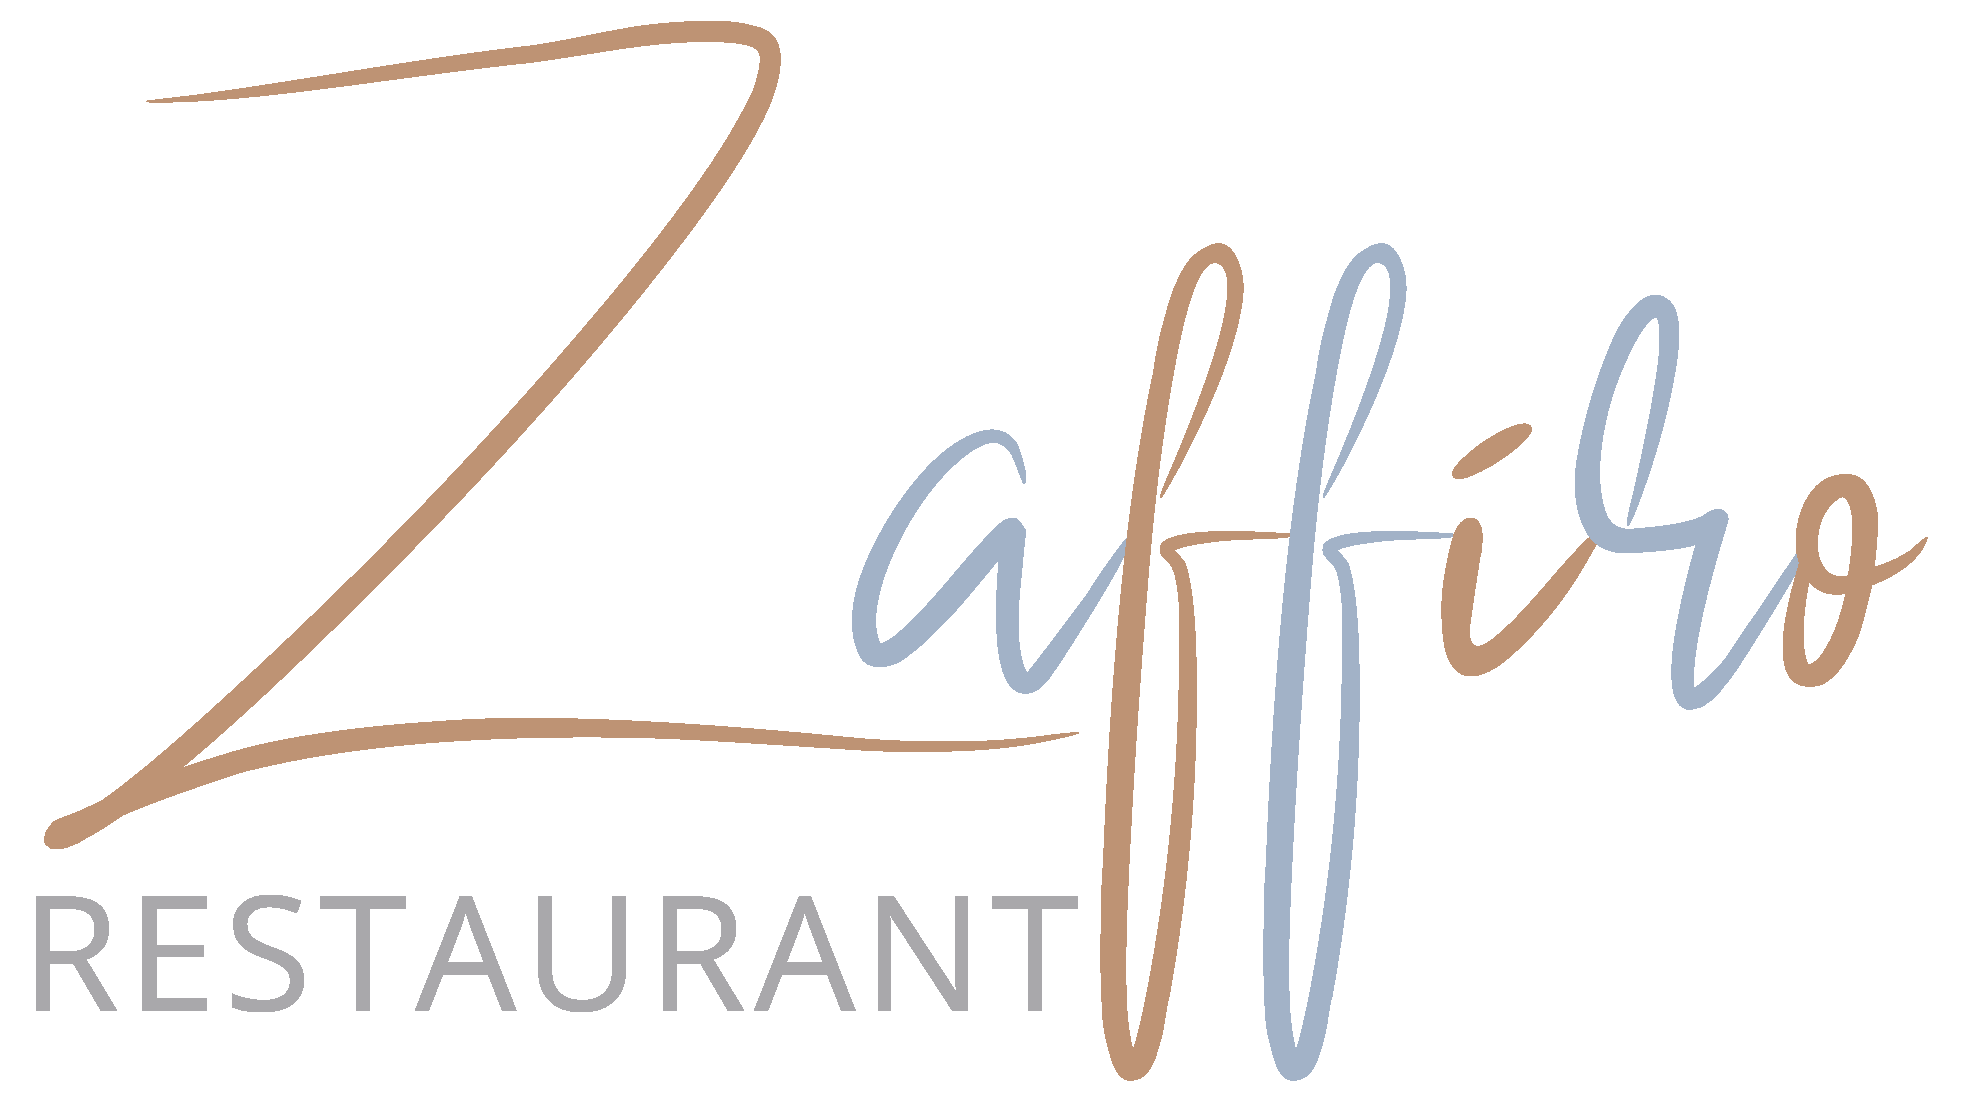 Zaffiro Logo